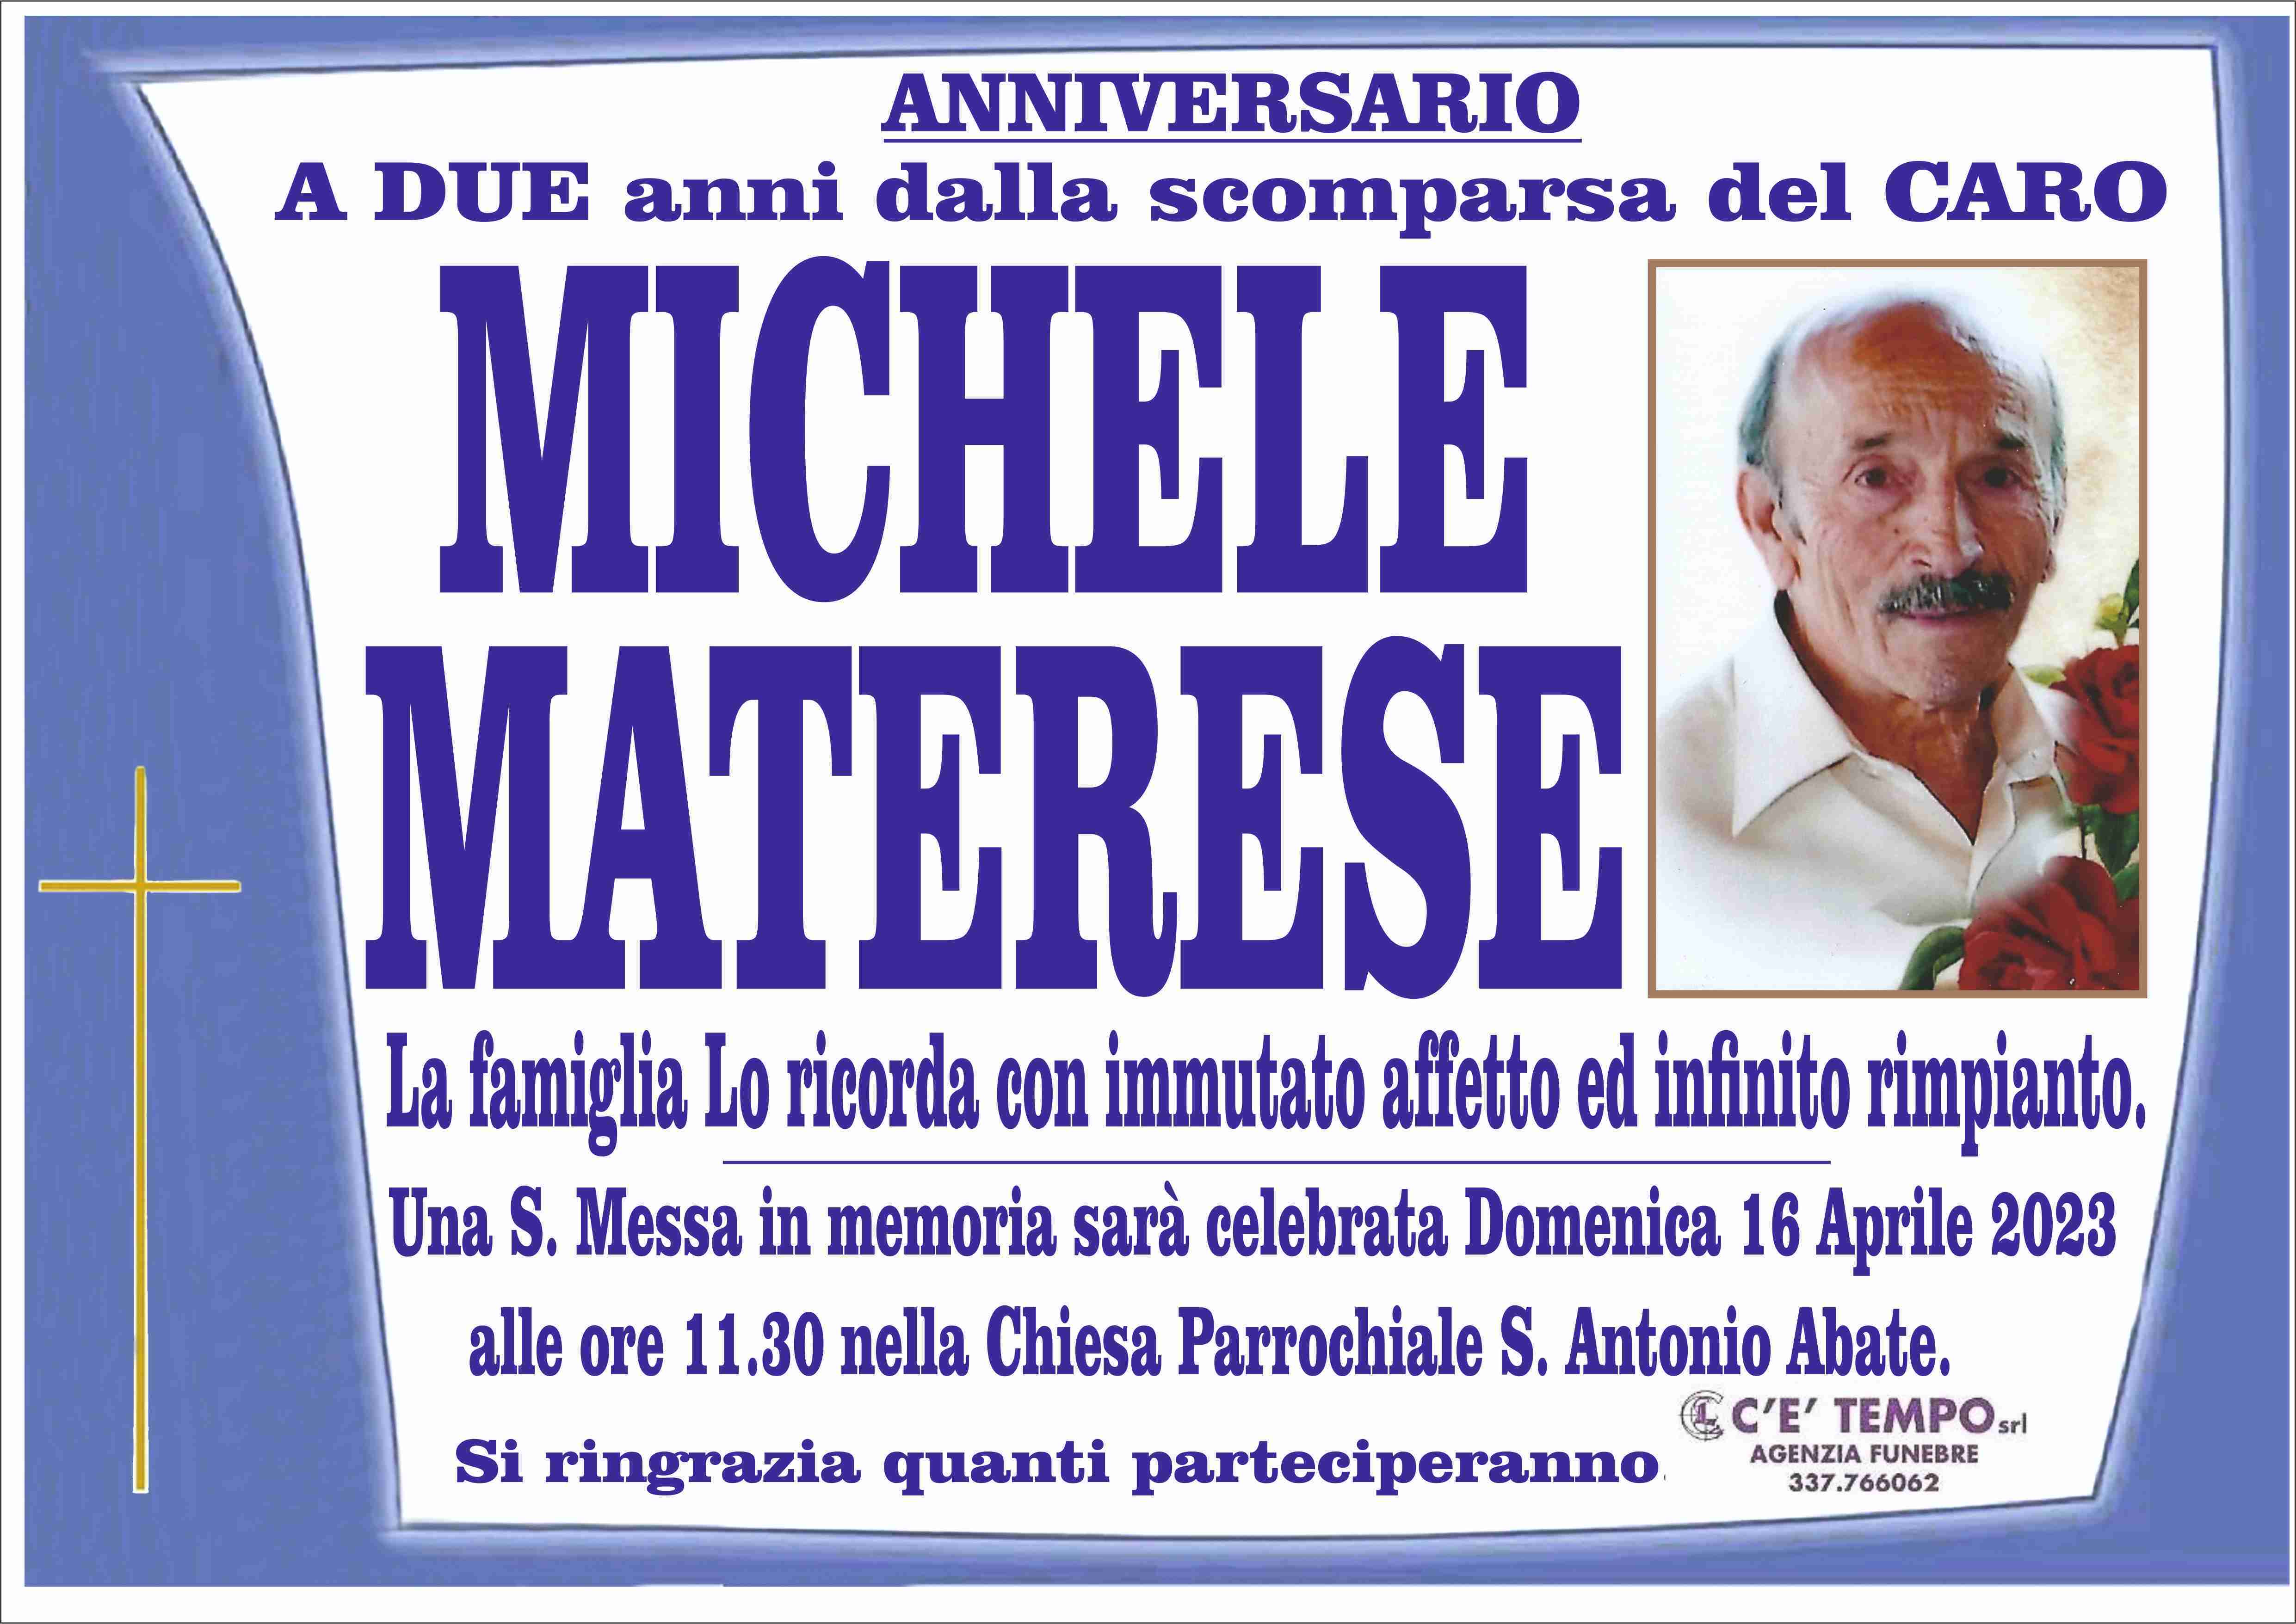 Michele Materese